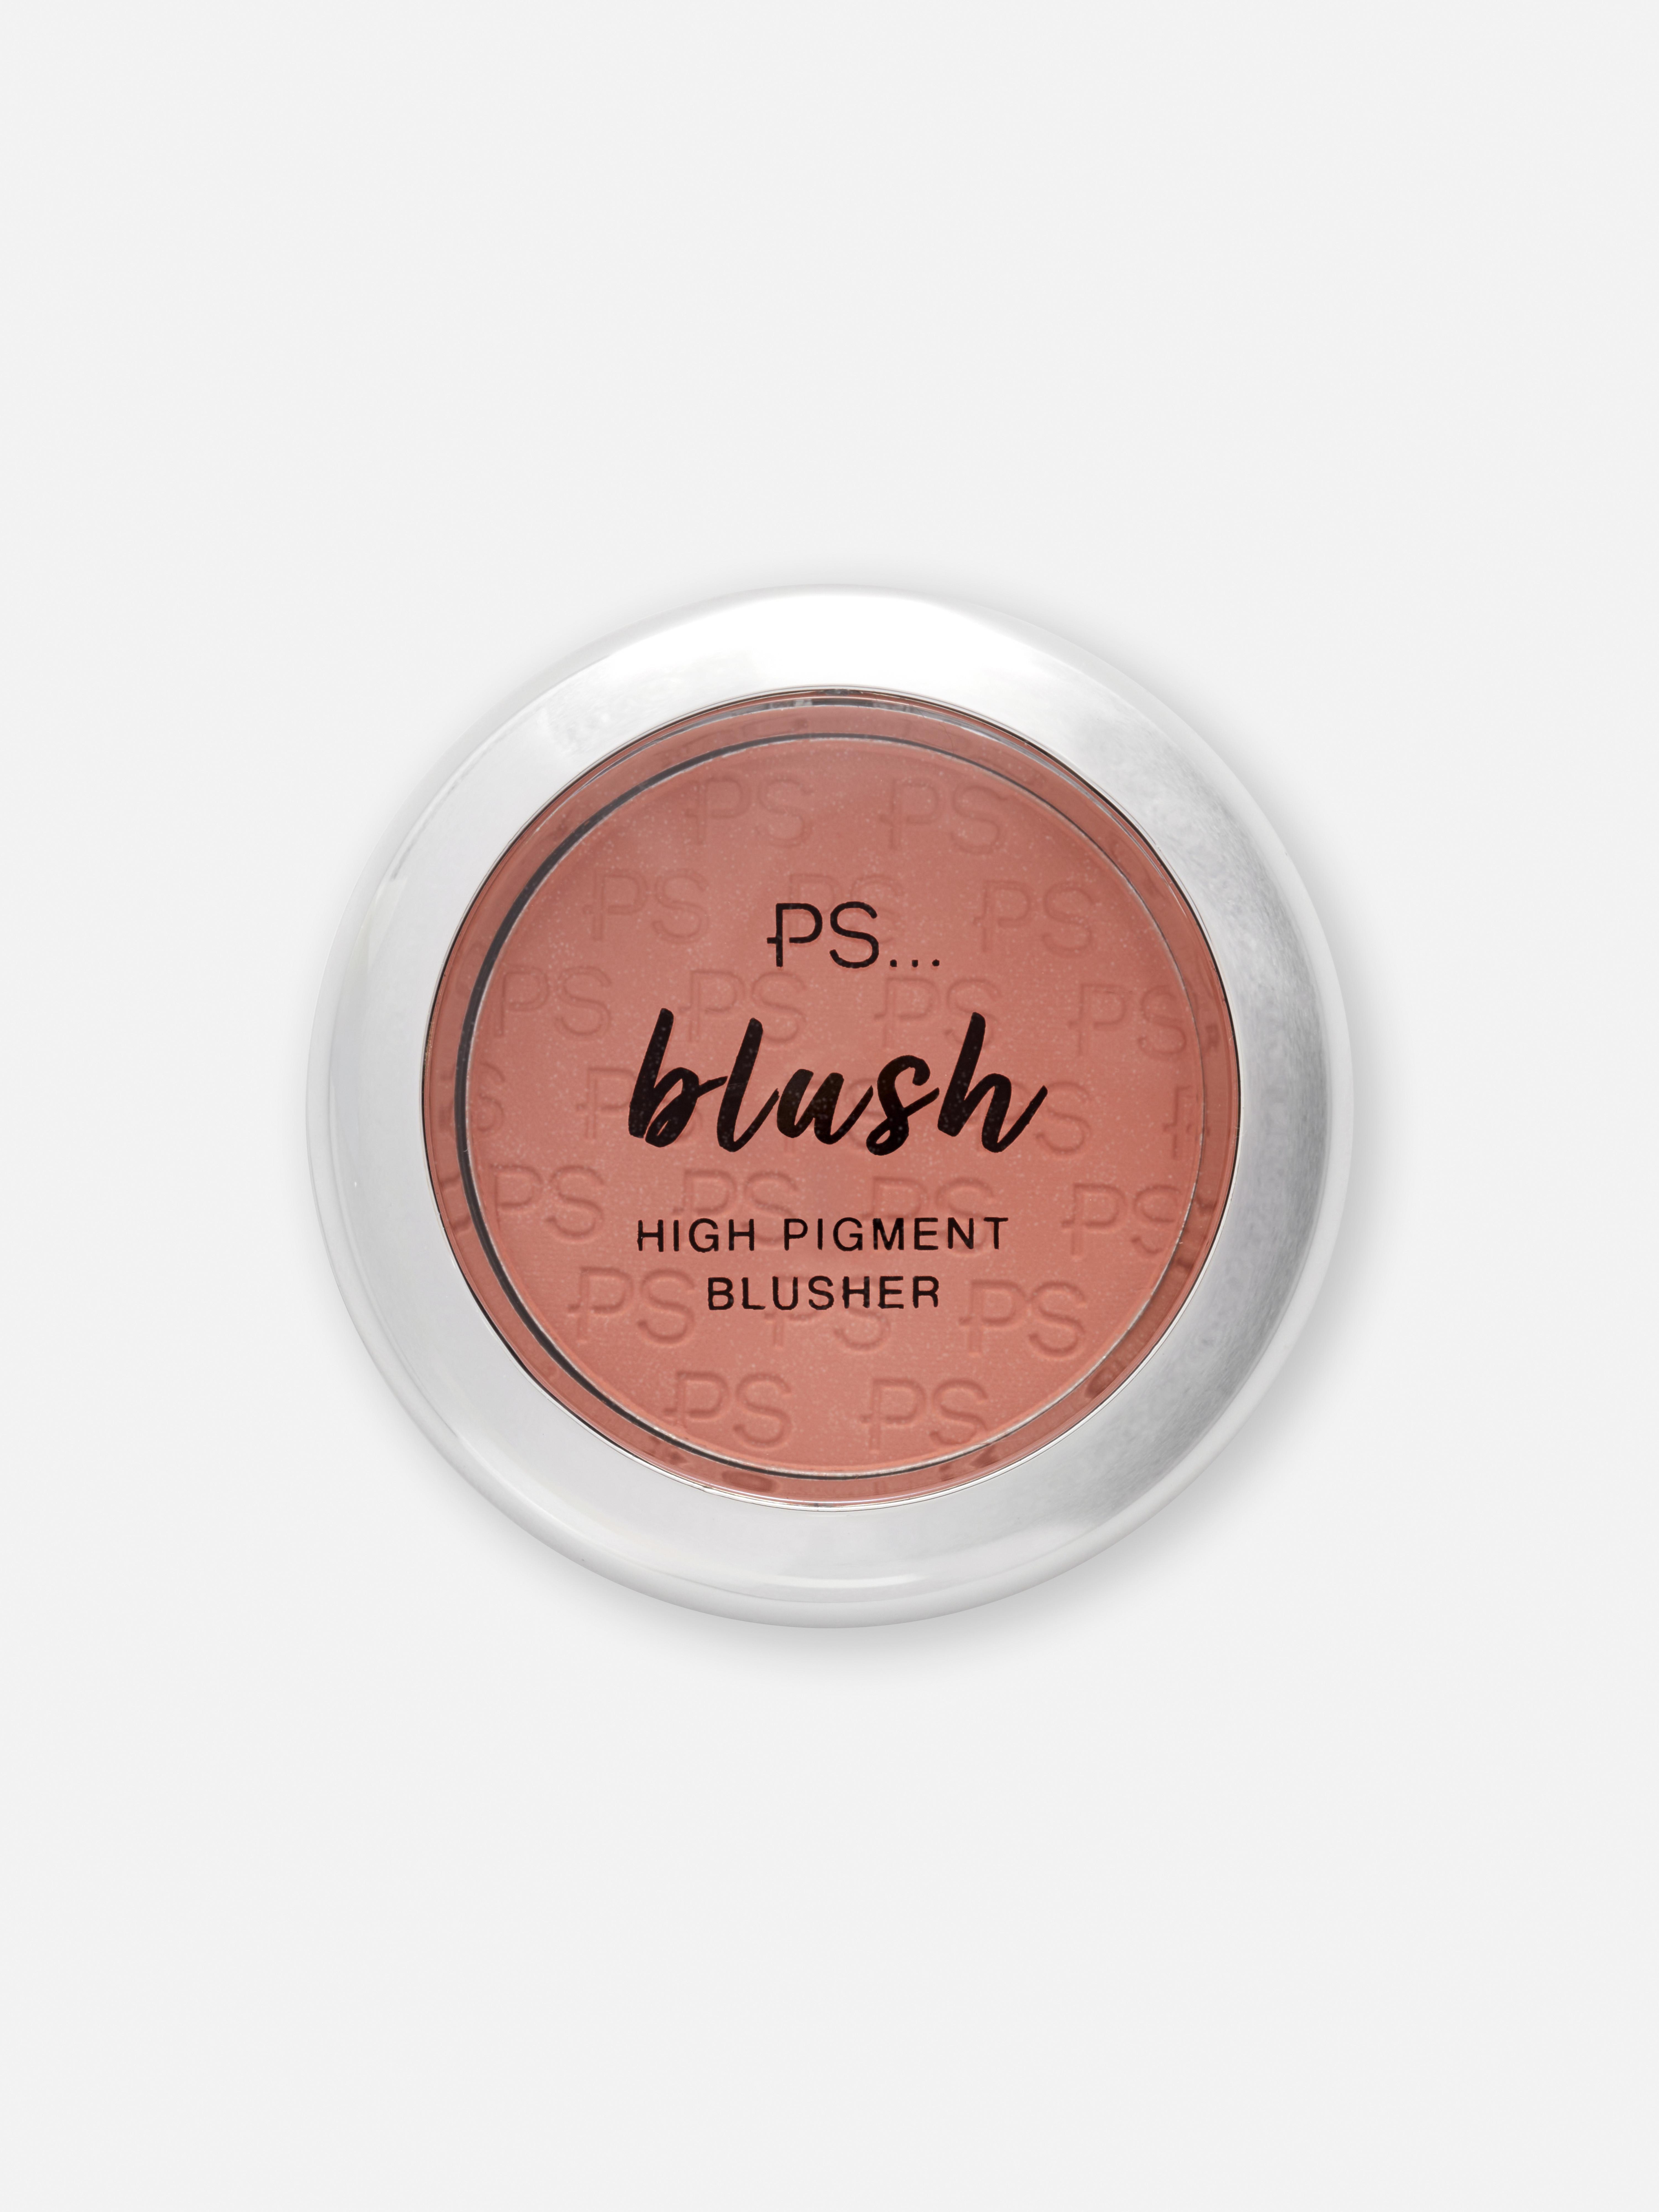 Blush alto pigmento PS Rosa-pálido